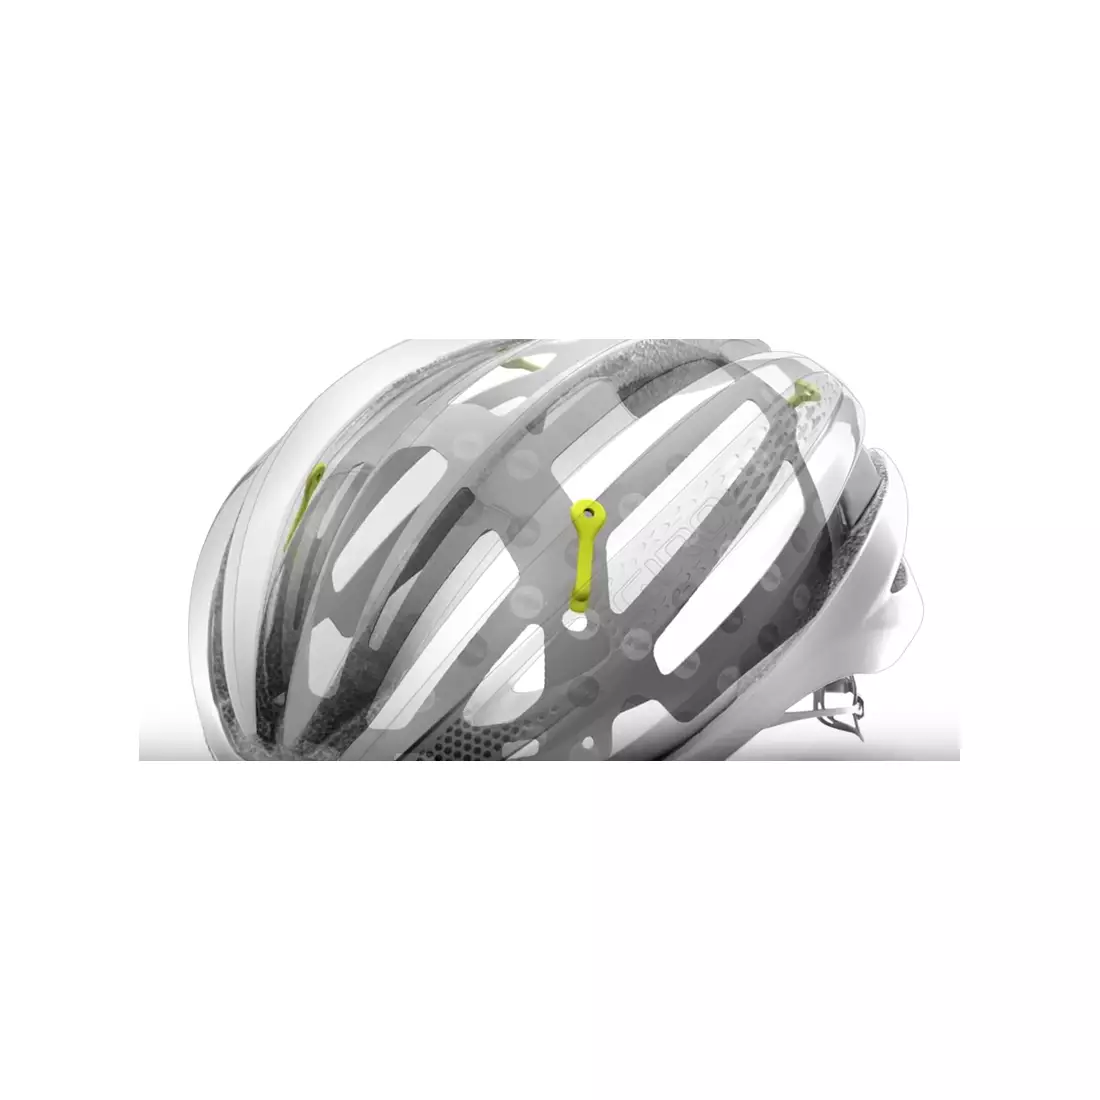 BELL TEMPO JOY RIDE MIPS - BEL-7088772 dámská cyklistická helma matná bílá třešeň